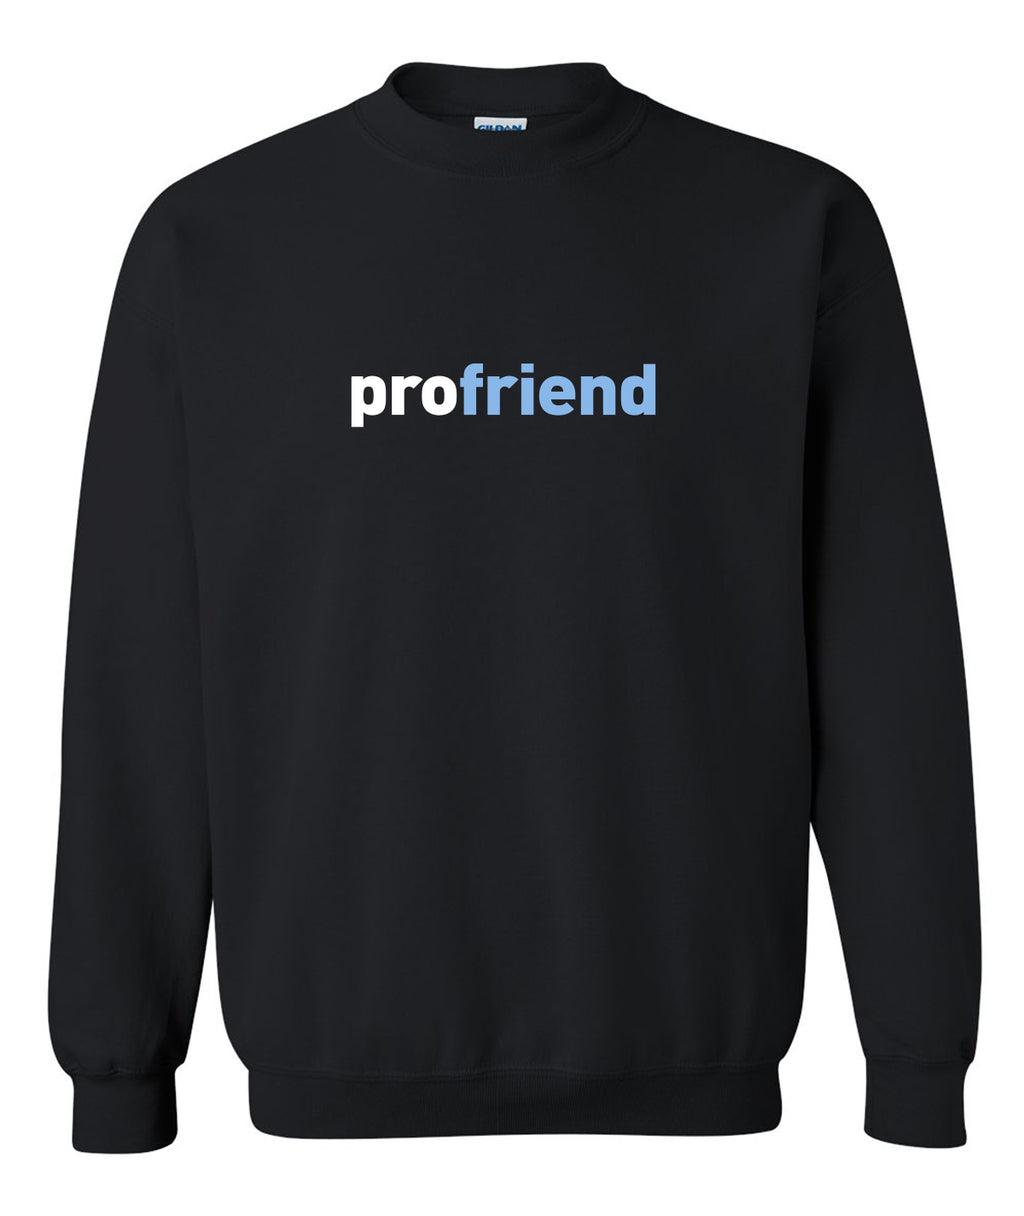 Profriend Adult Crewneck Sweatshirt